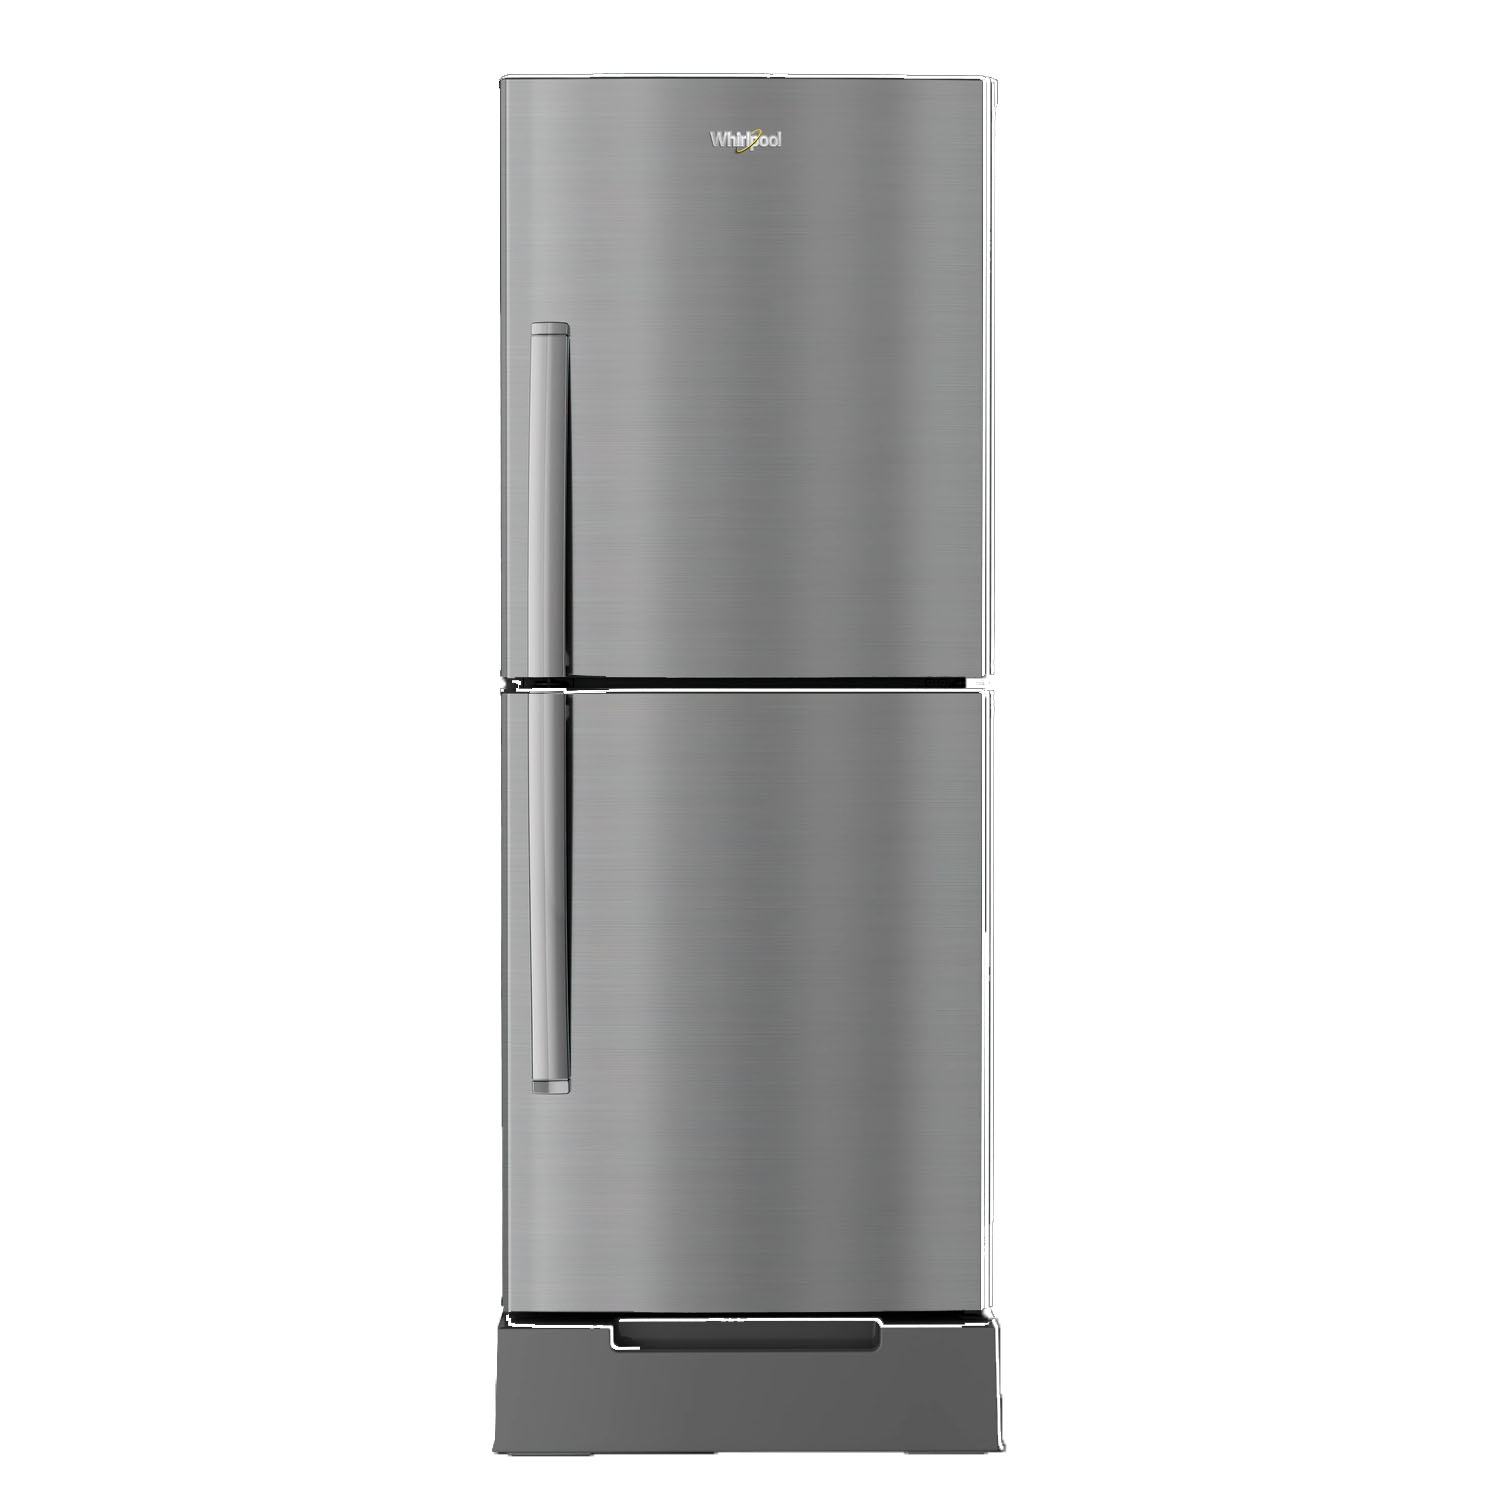 WHIRLPOOL 236 Liter Refrigerator FreshMagic Pro Chromium Steel